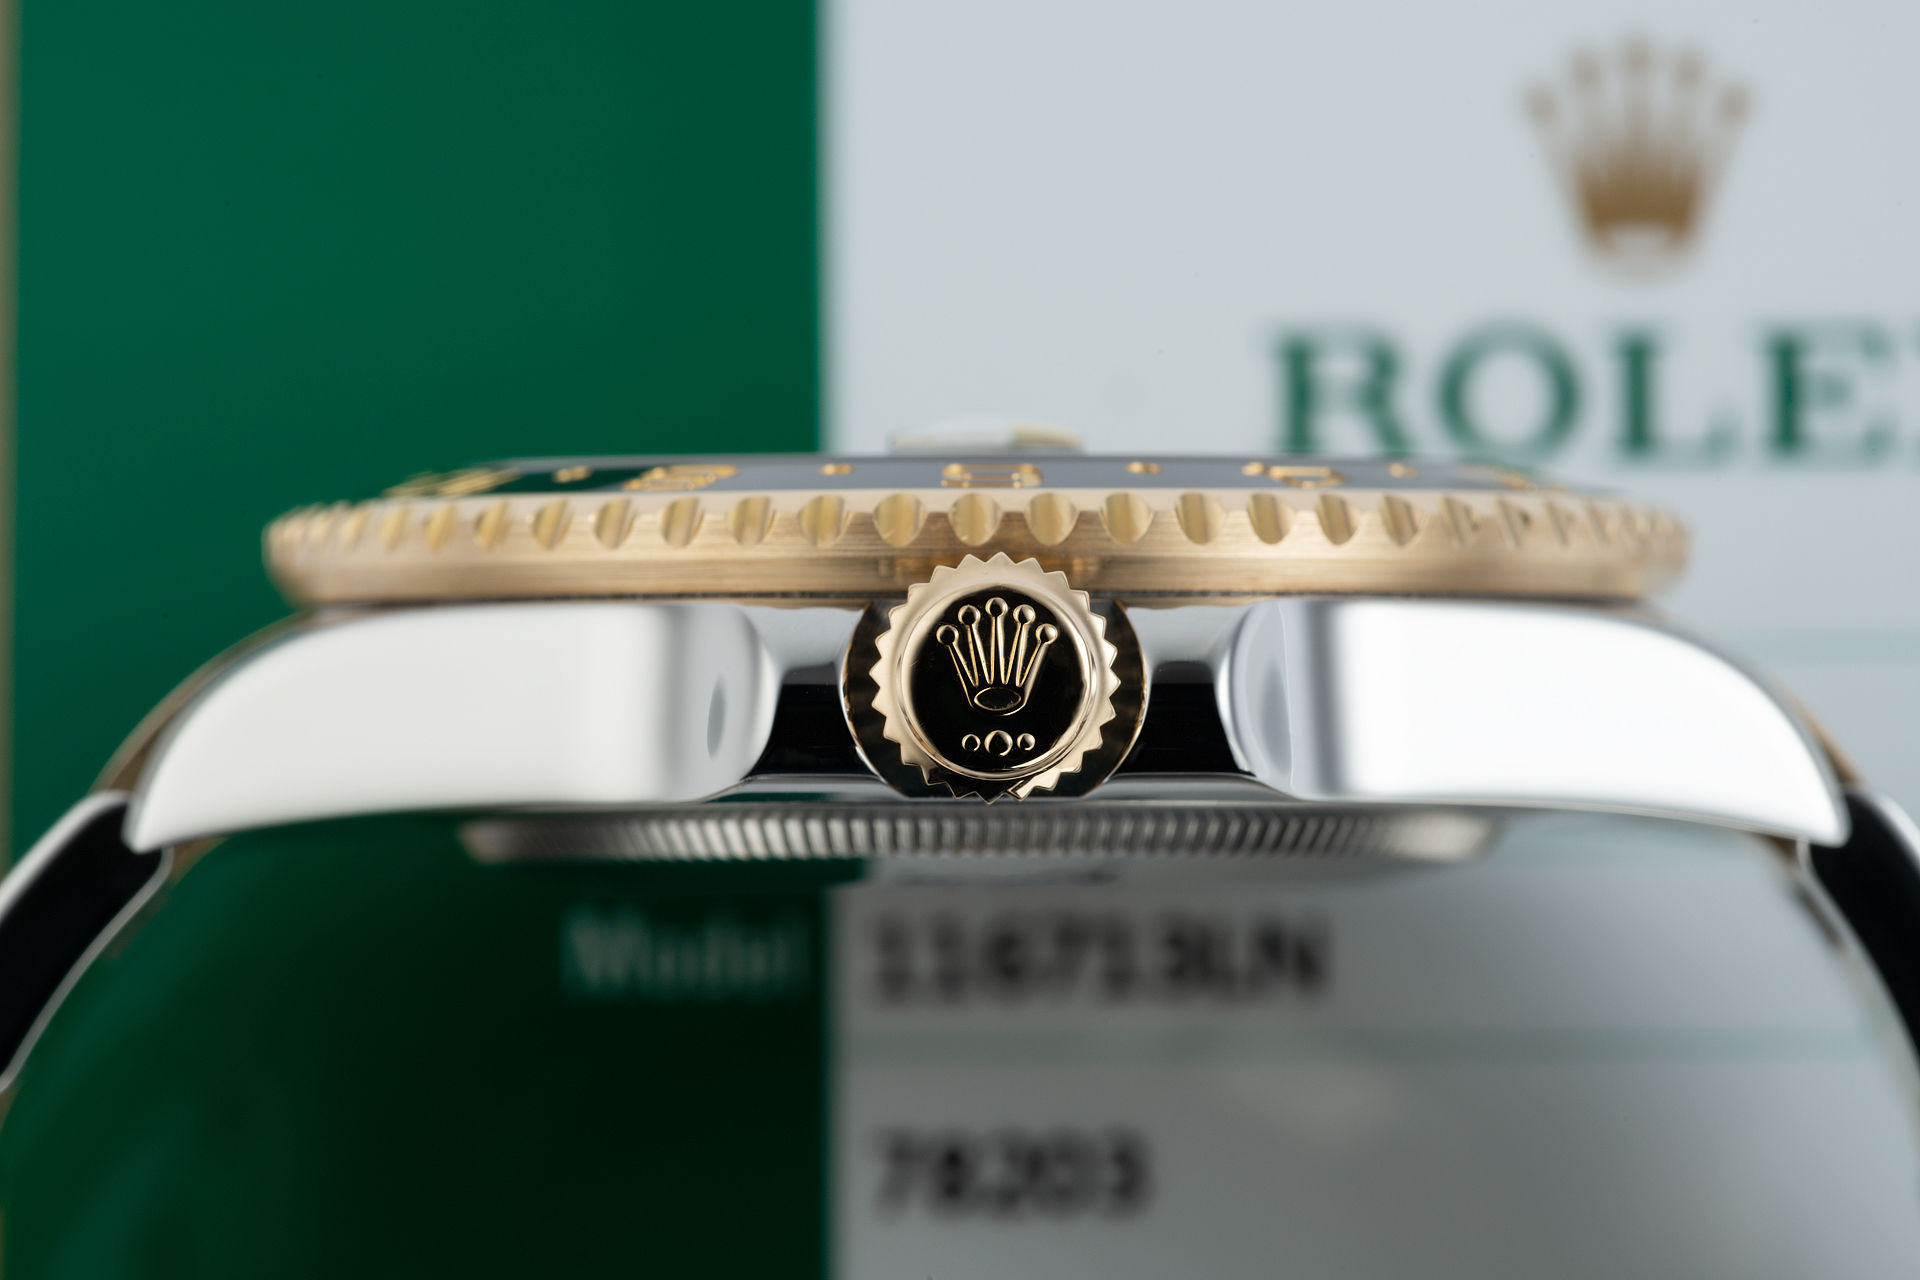 ref 116713LN | 'Box & Warranty Card' | Rolex GMT-Master